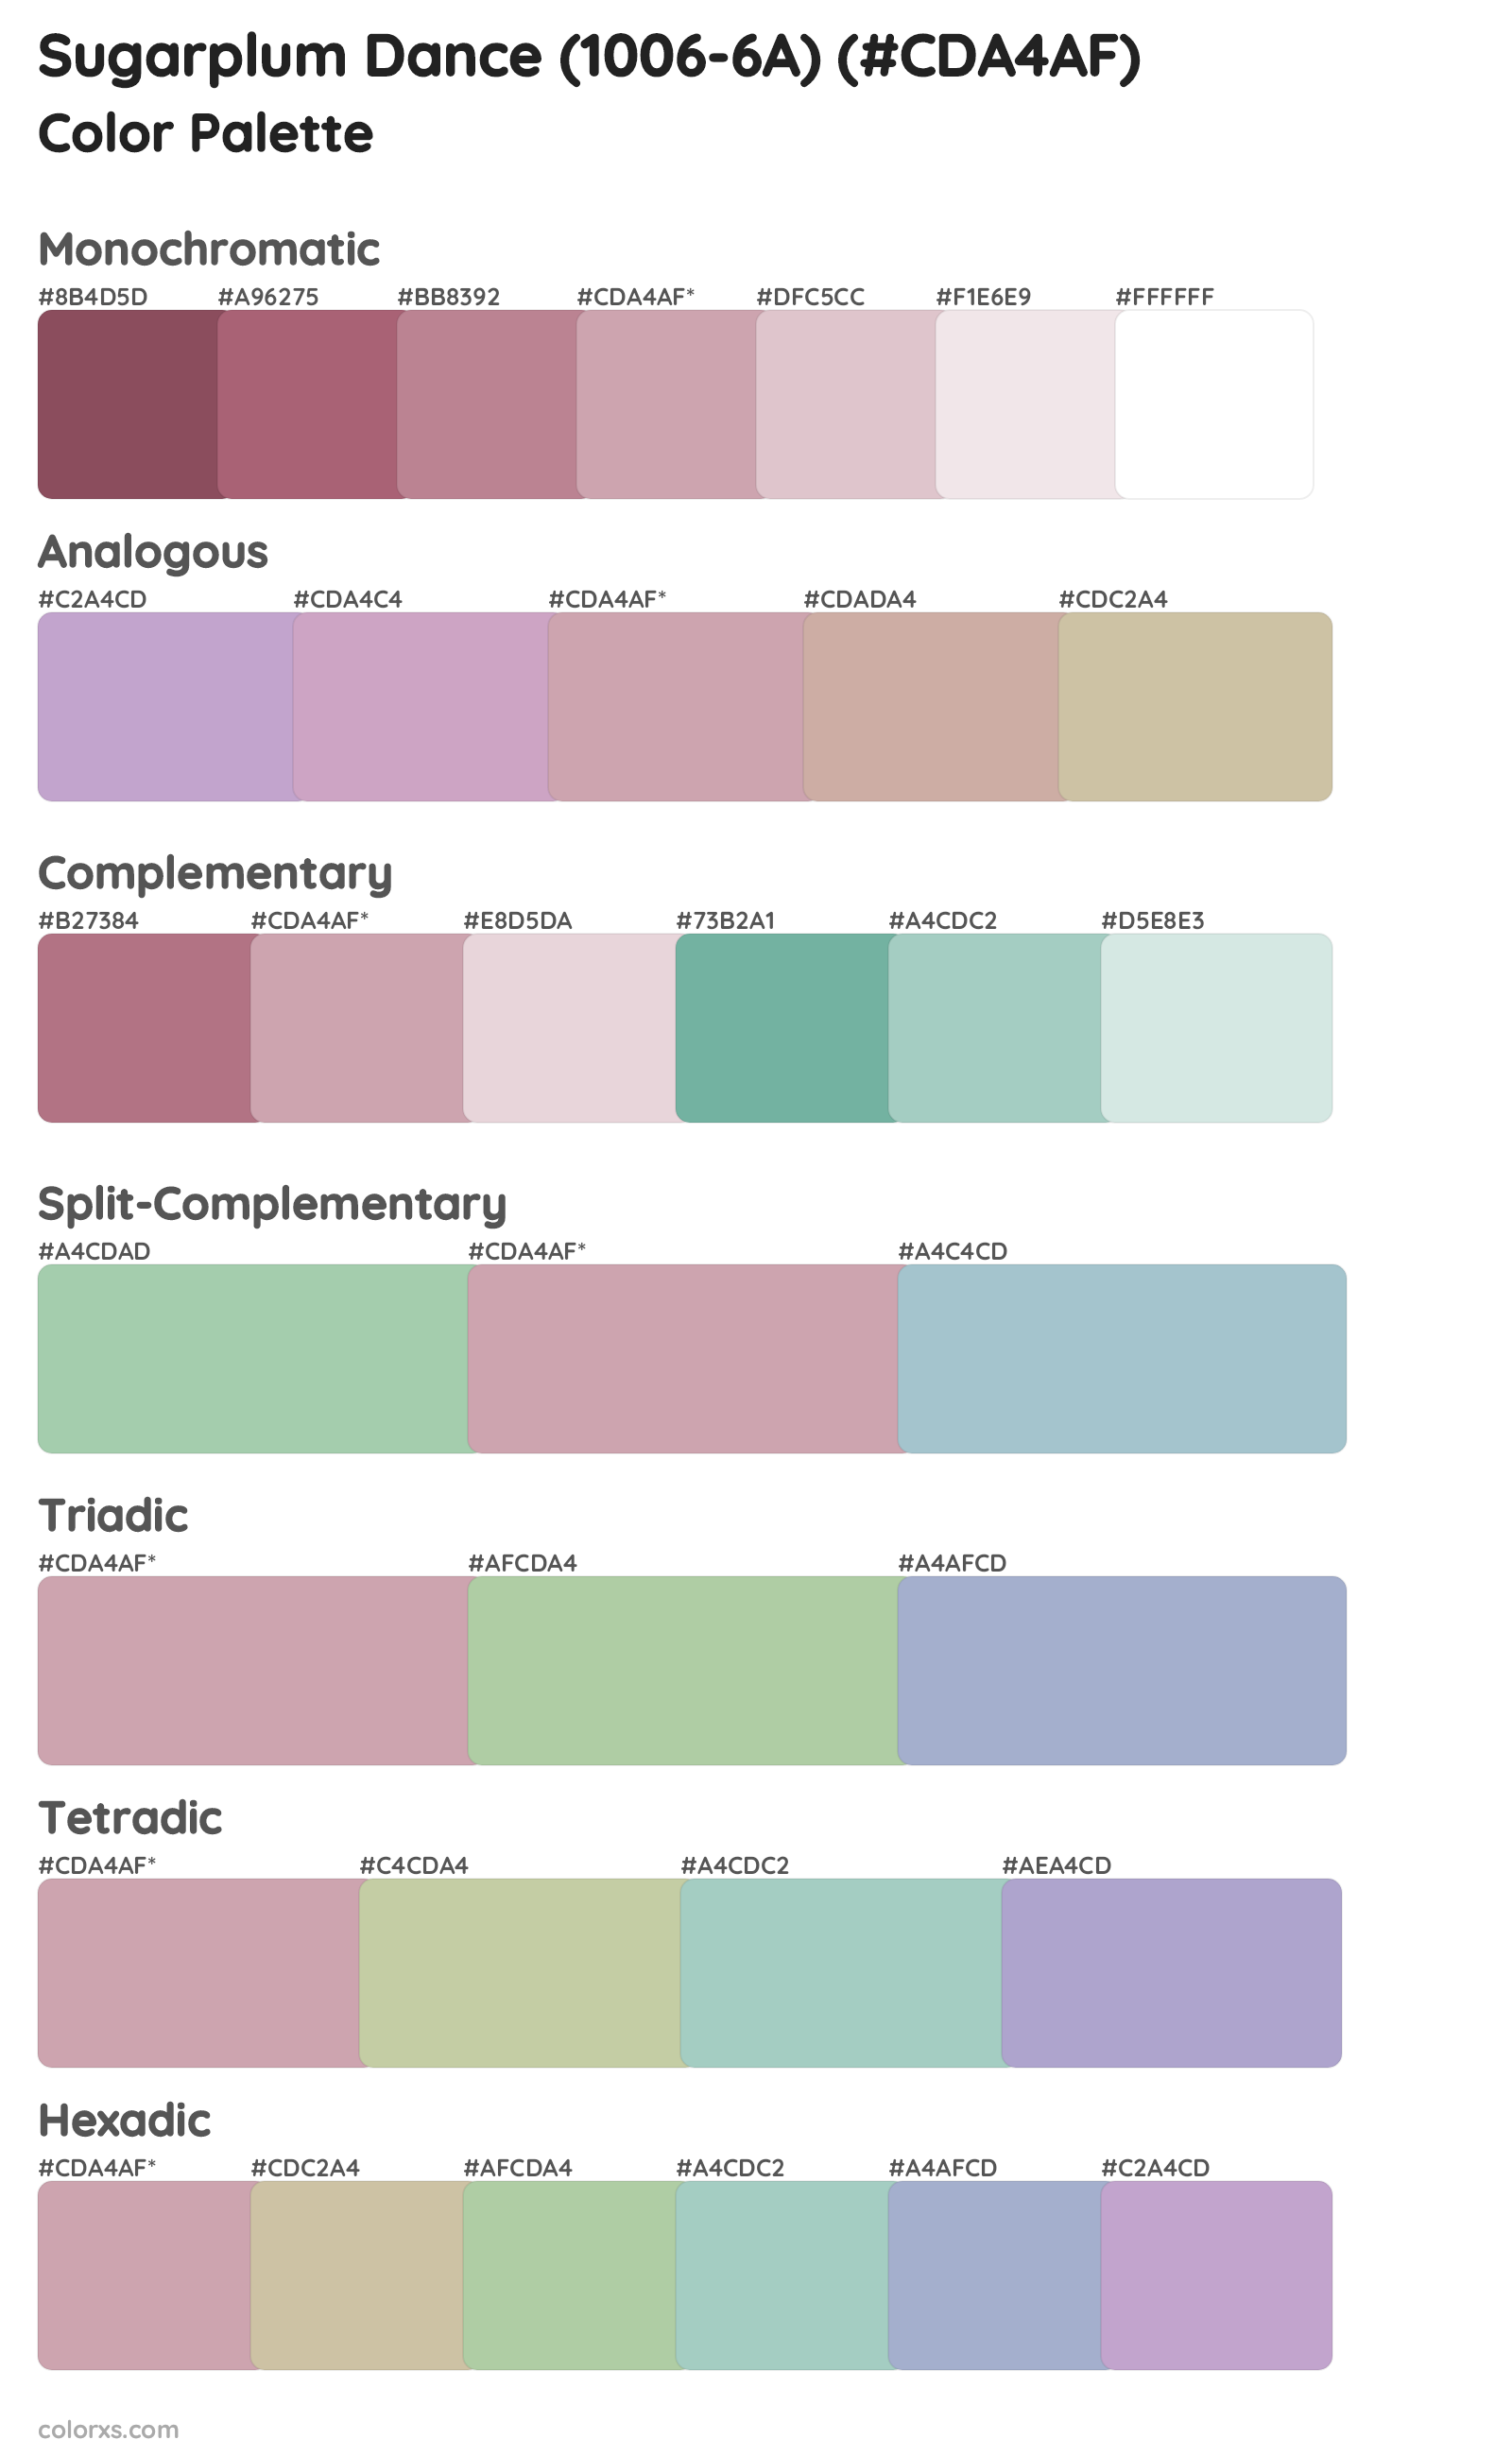 Sugarplum Dance (1006-6A) Color Scheme Palettes